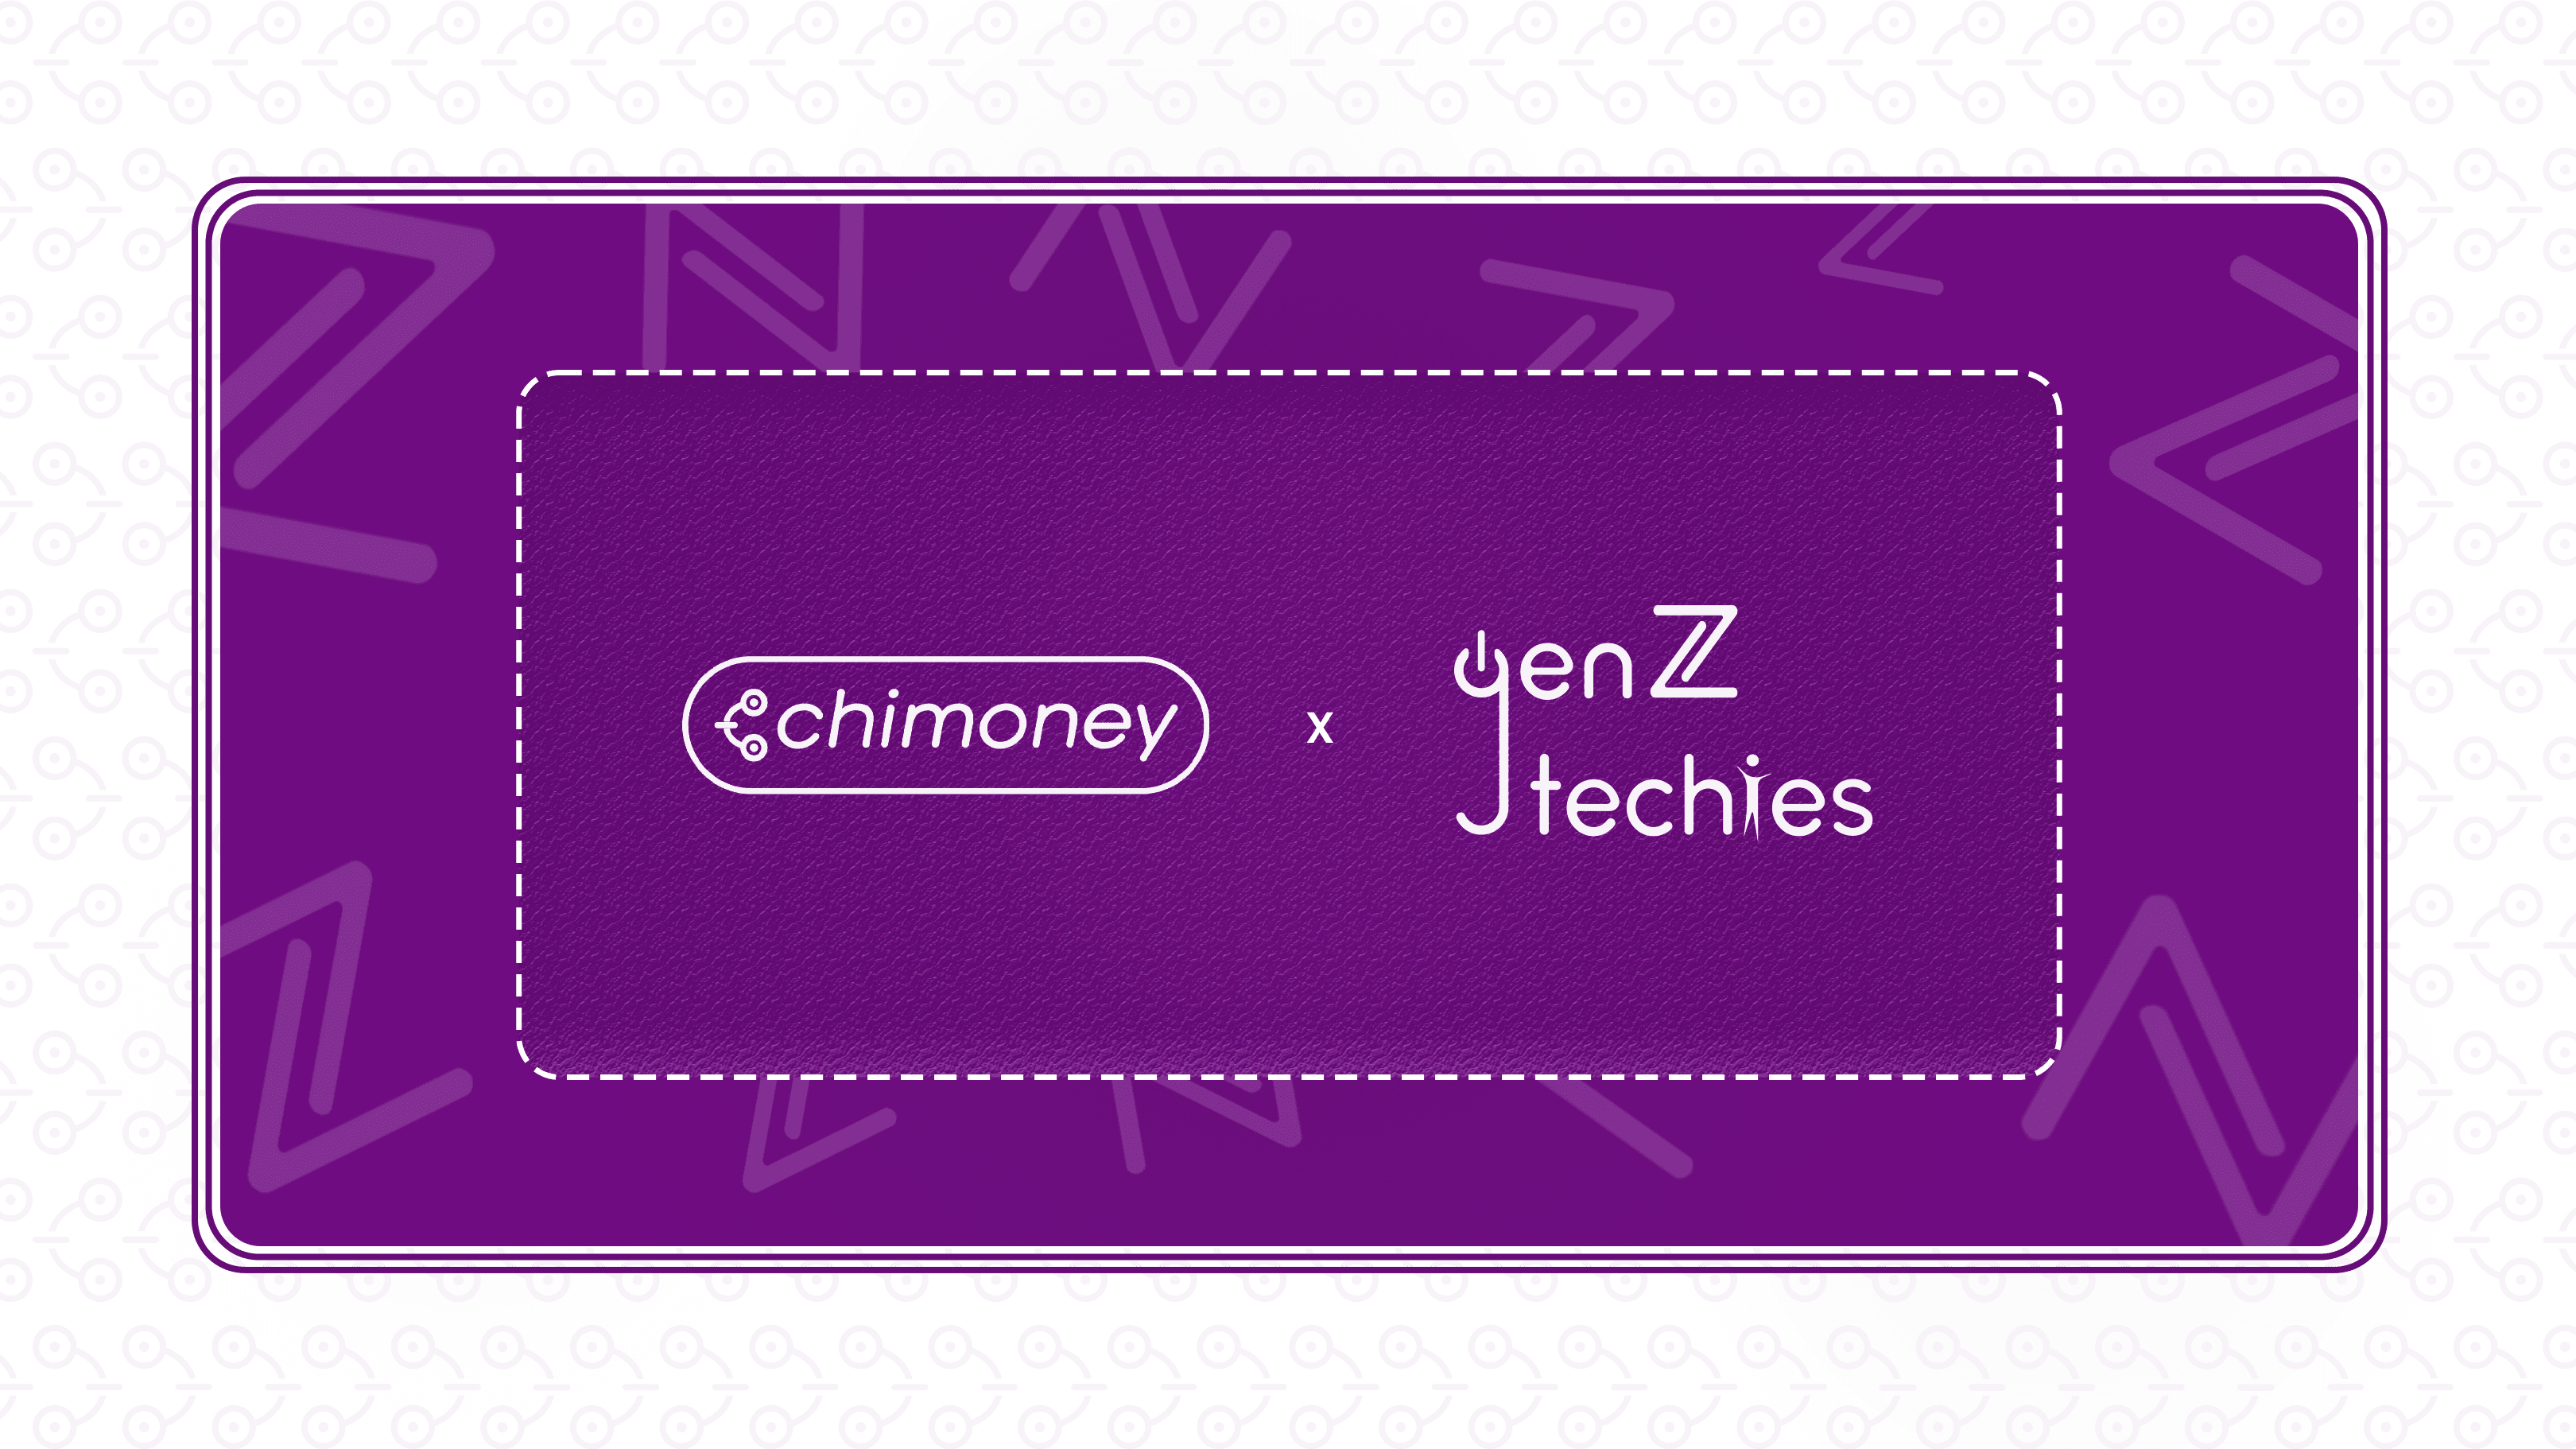 Chimoney x Gen Z Techies